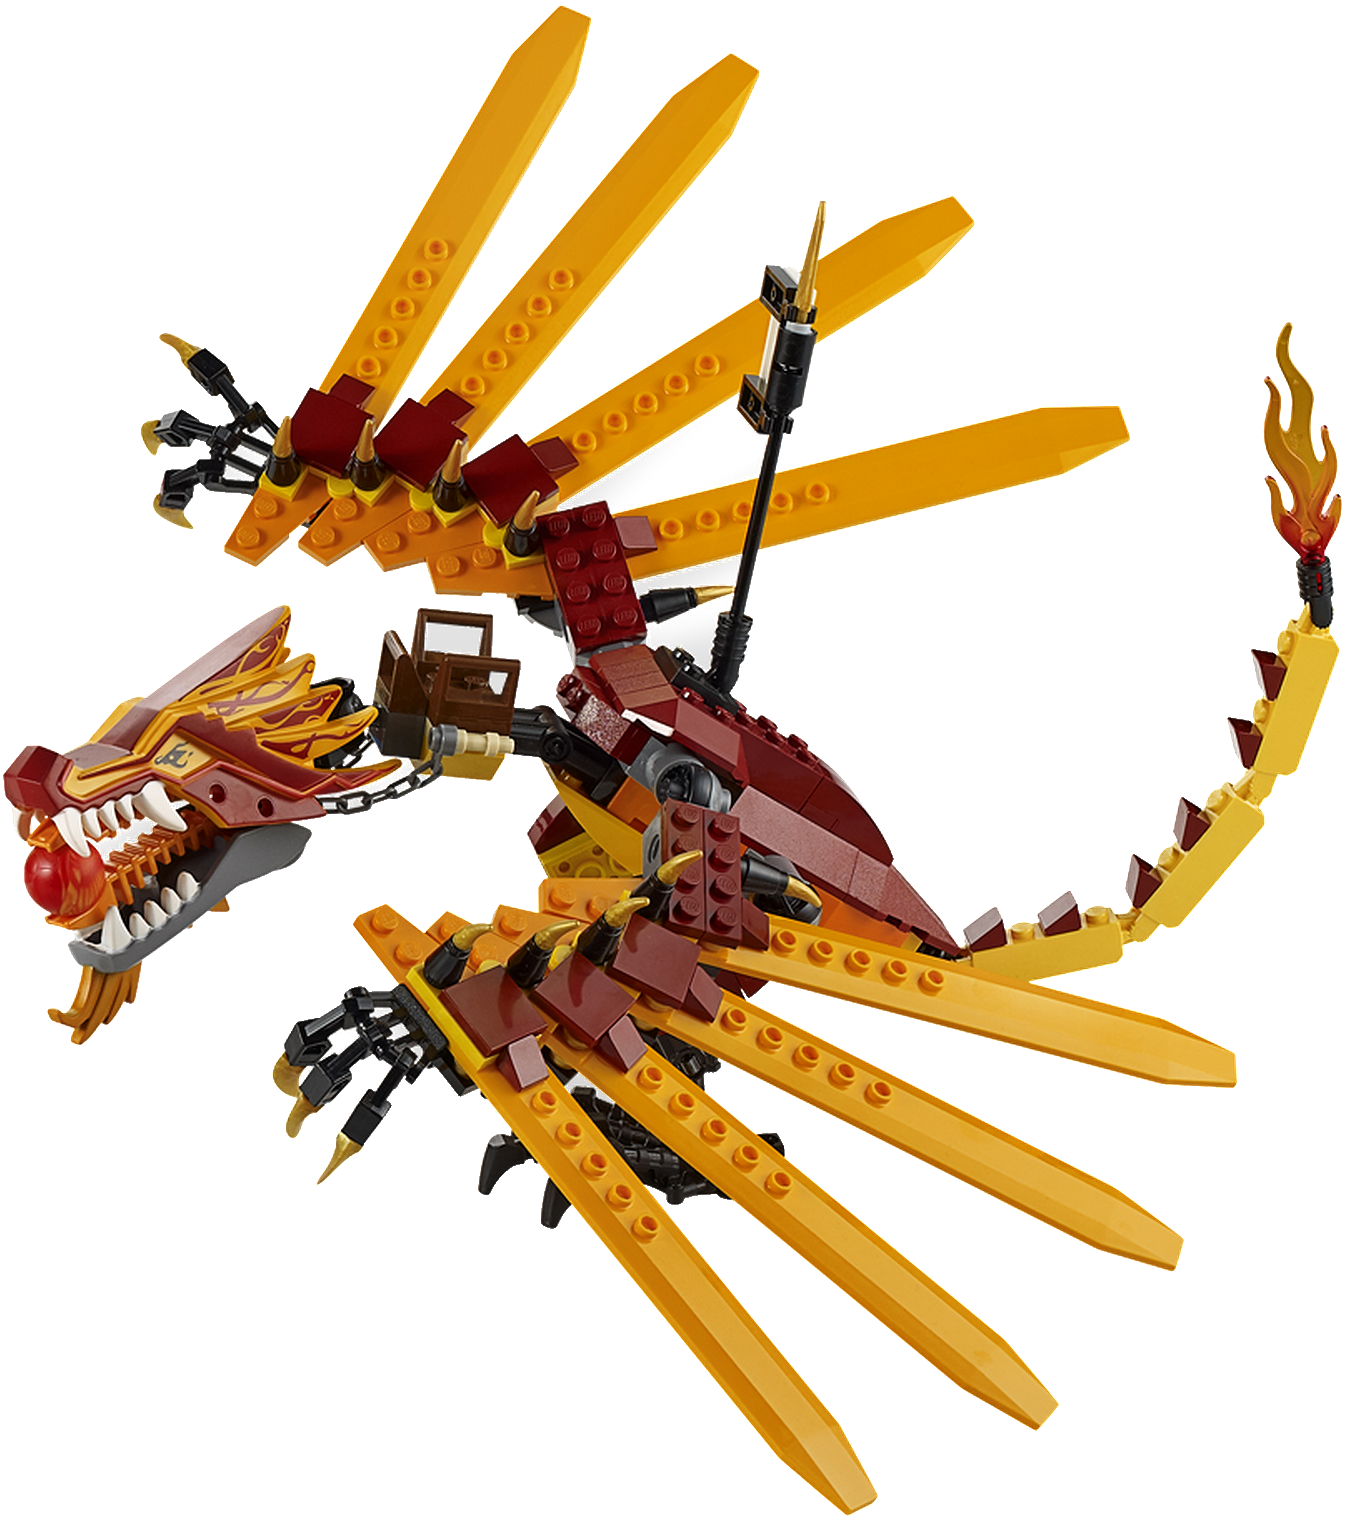 Ninjago Dragons (Disambiguation) - Brickipedia, the LEGO Wiki